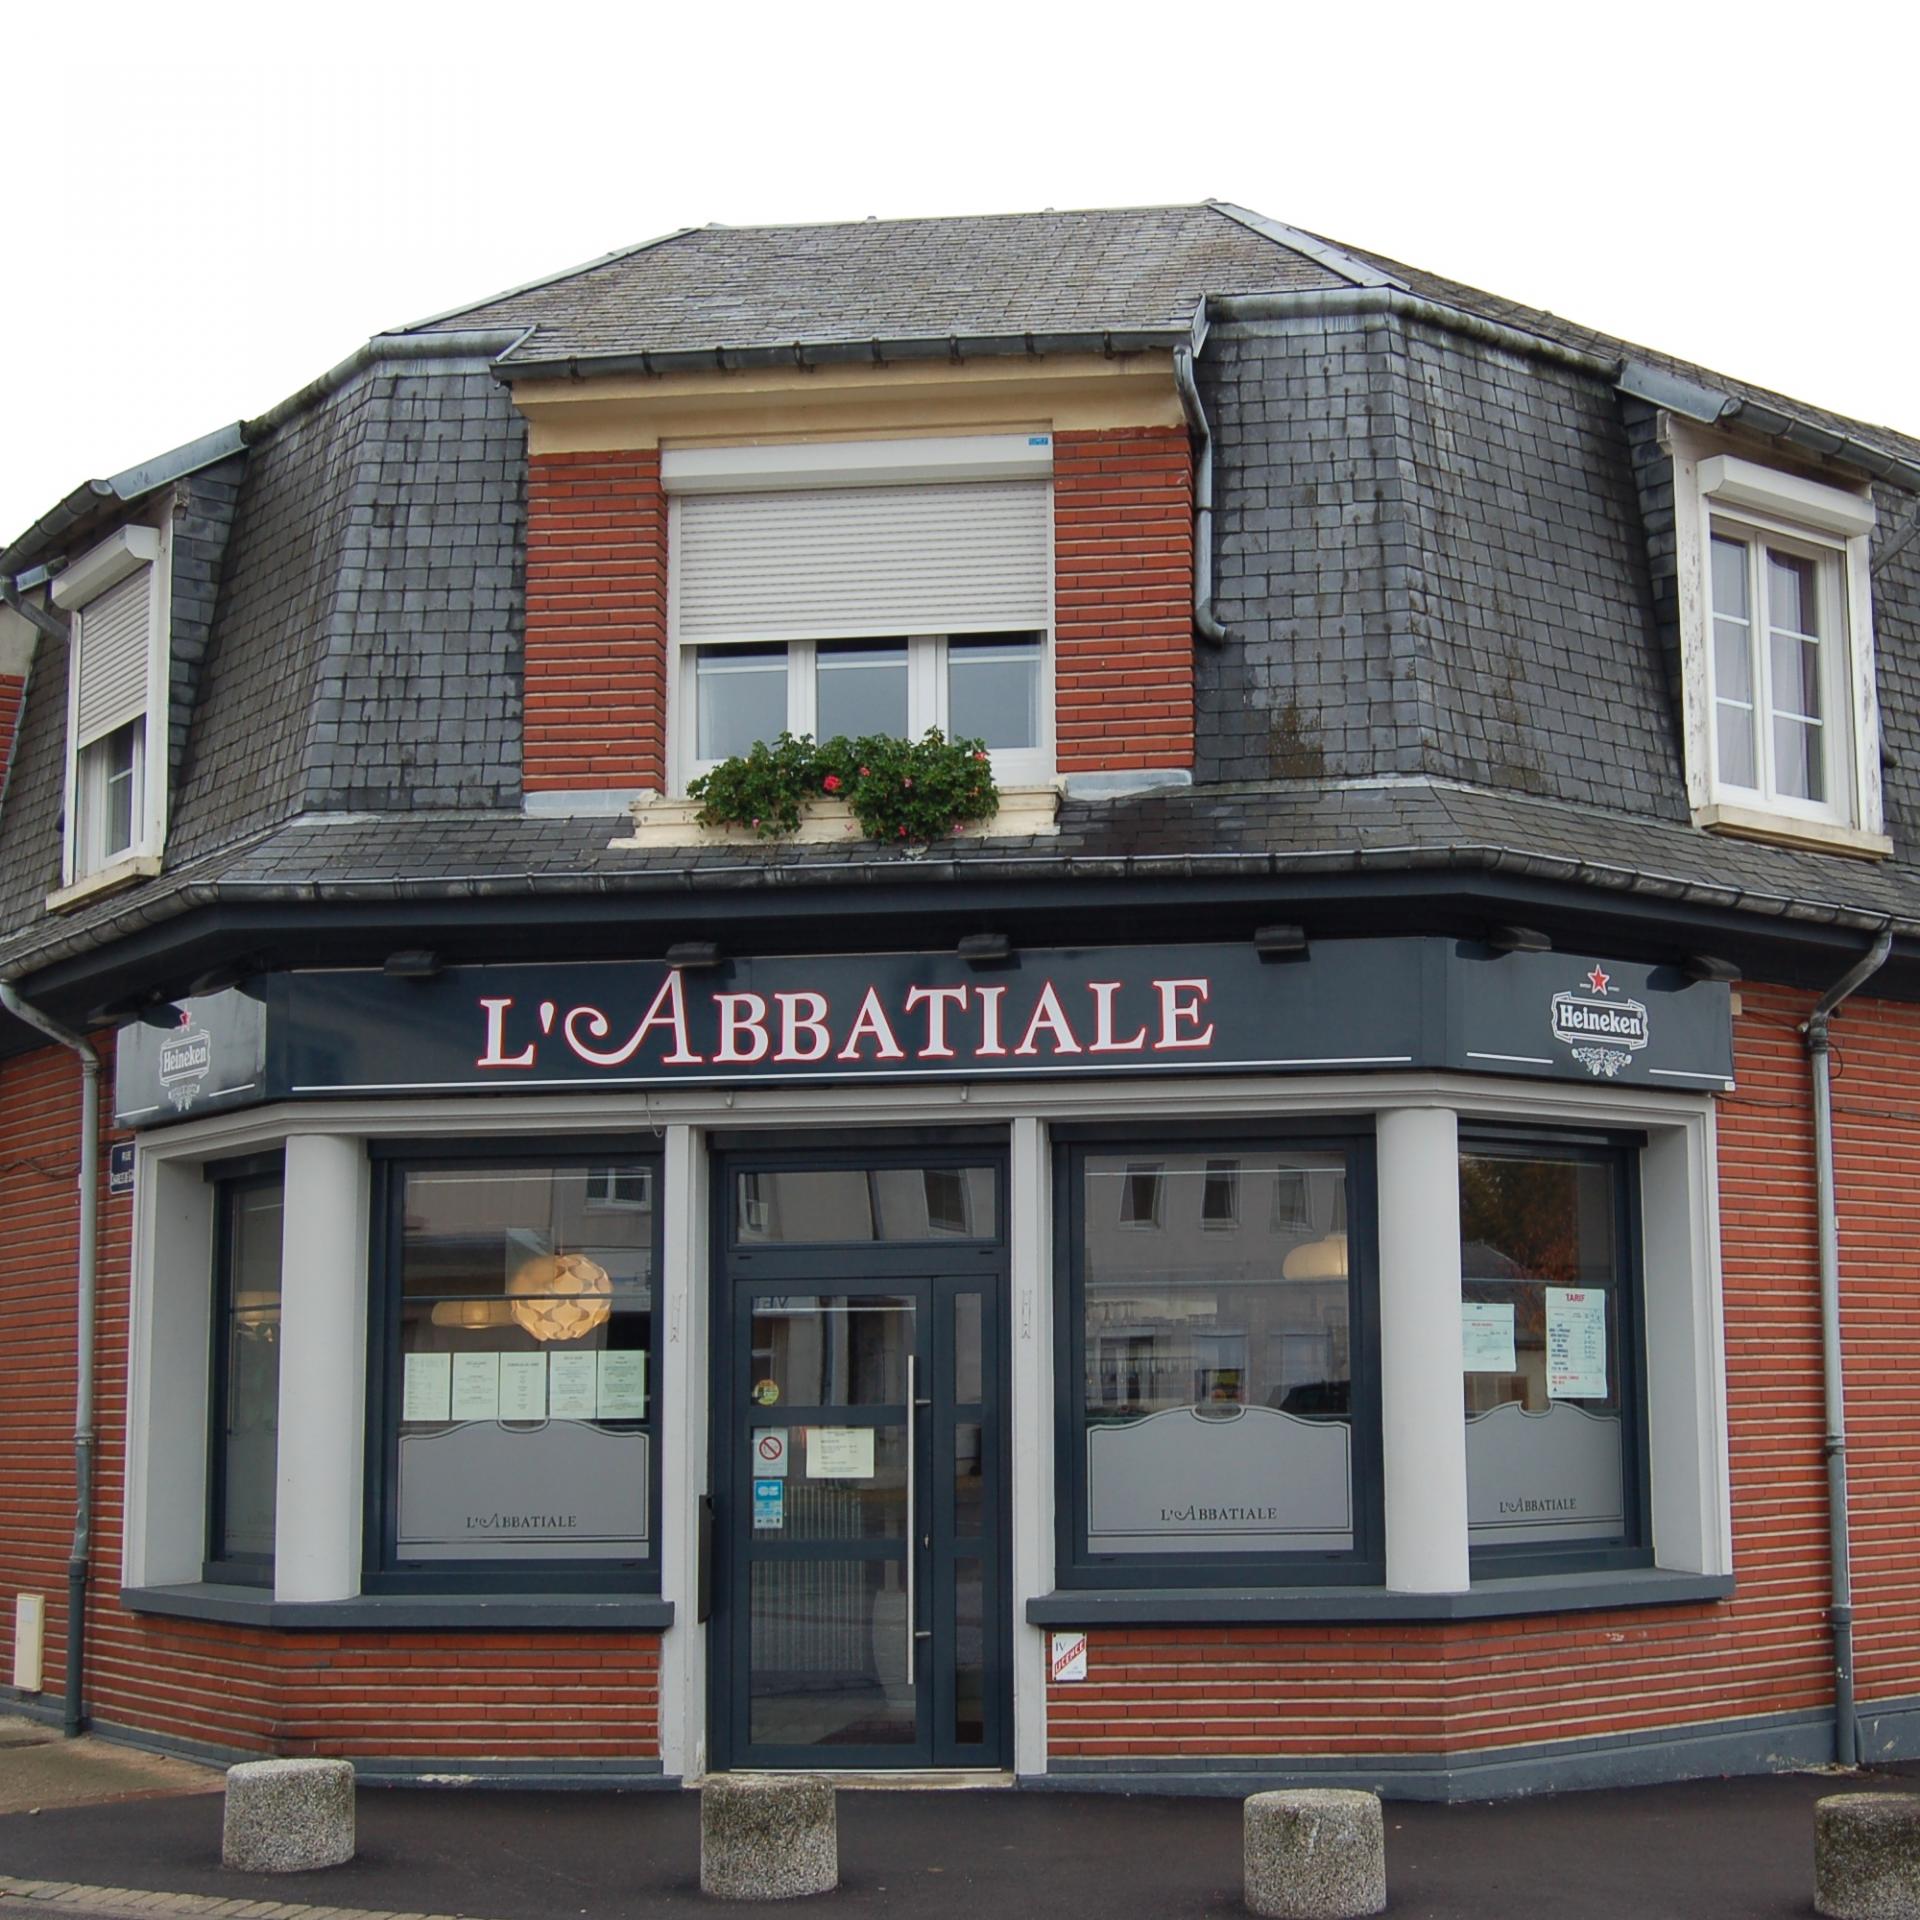 The restaurant l'Abbatiale